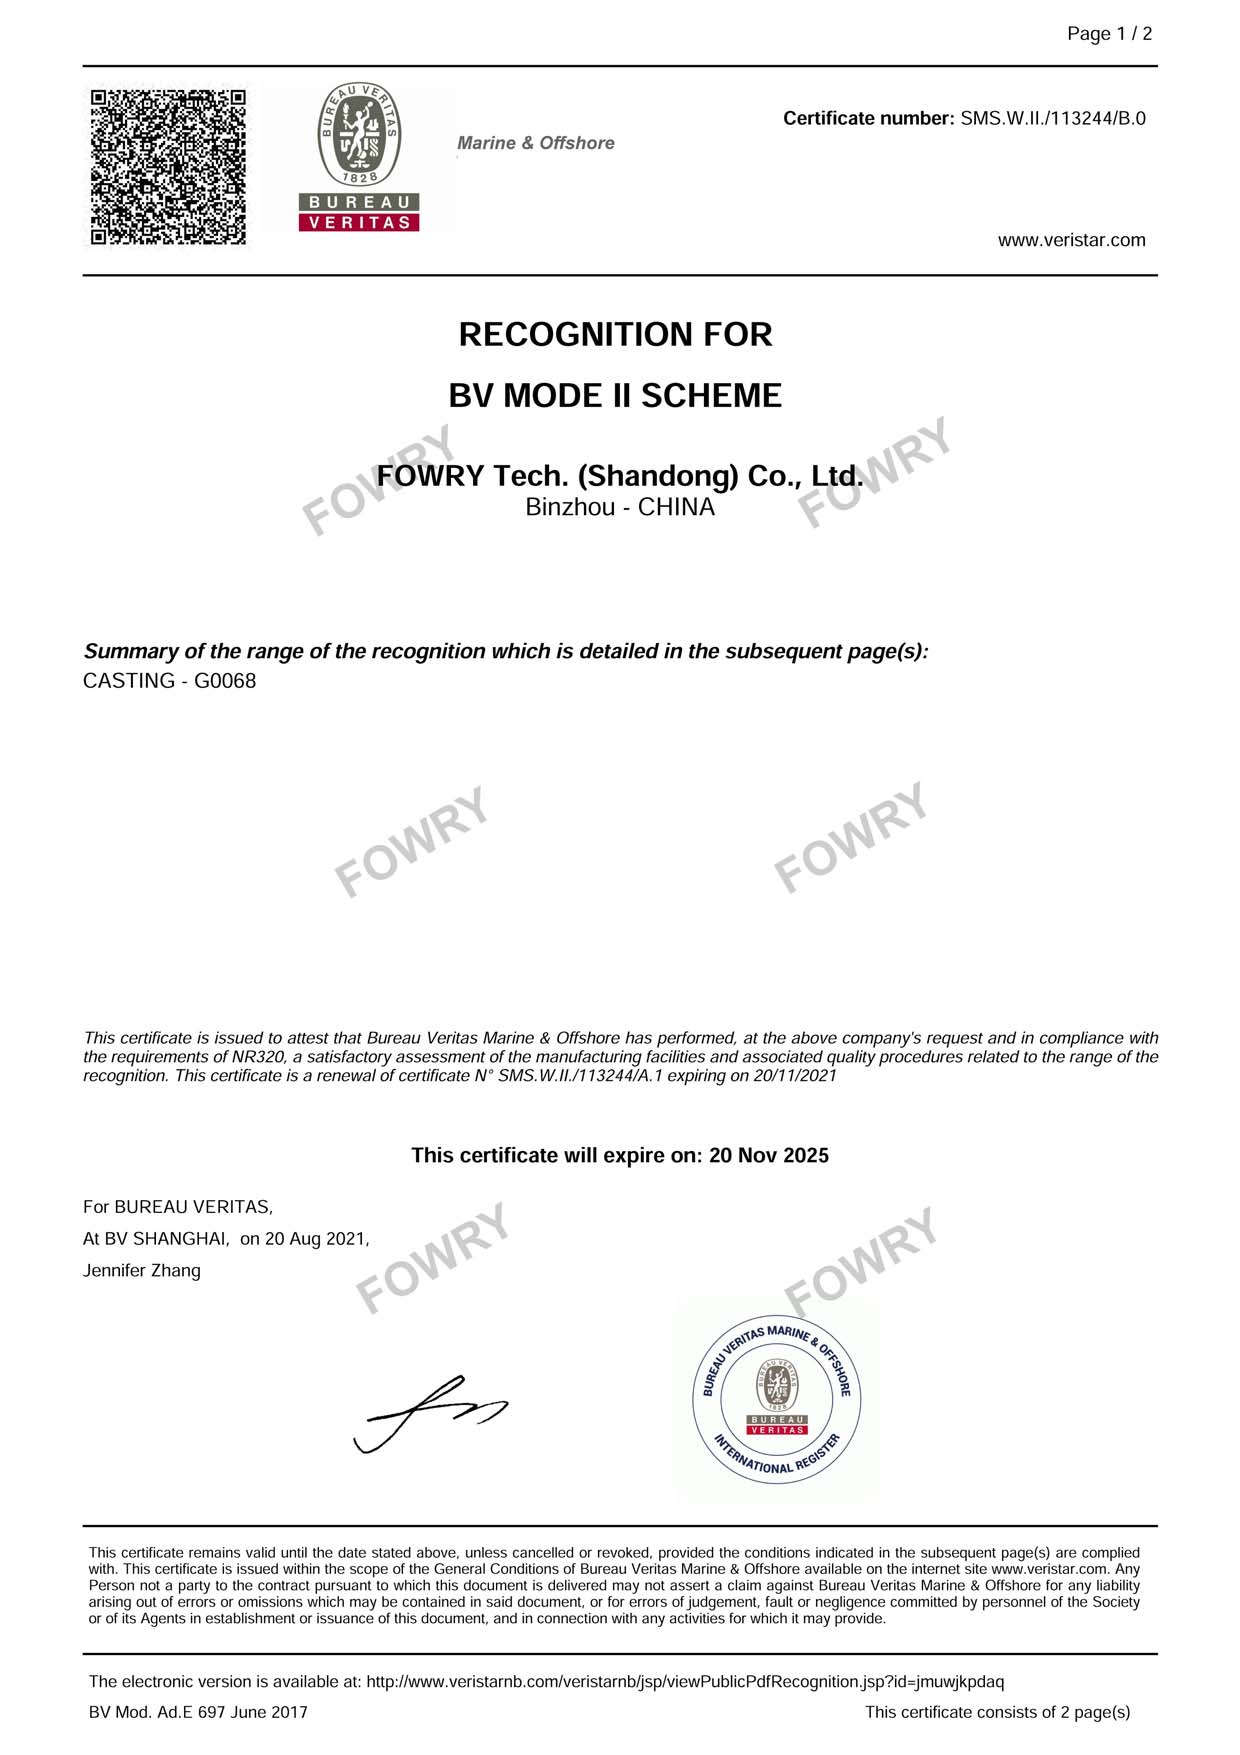 FOWRY BV certificate